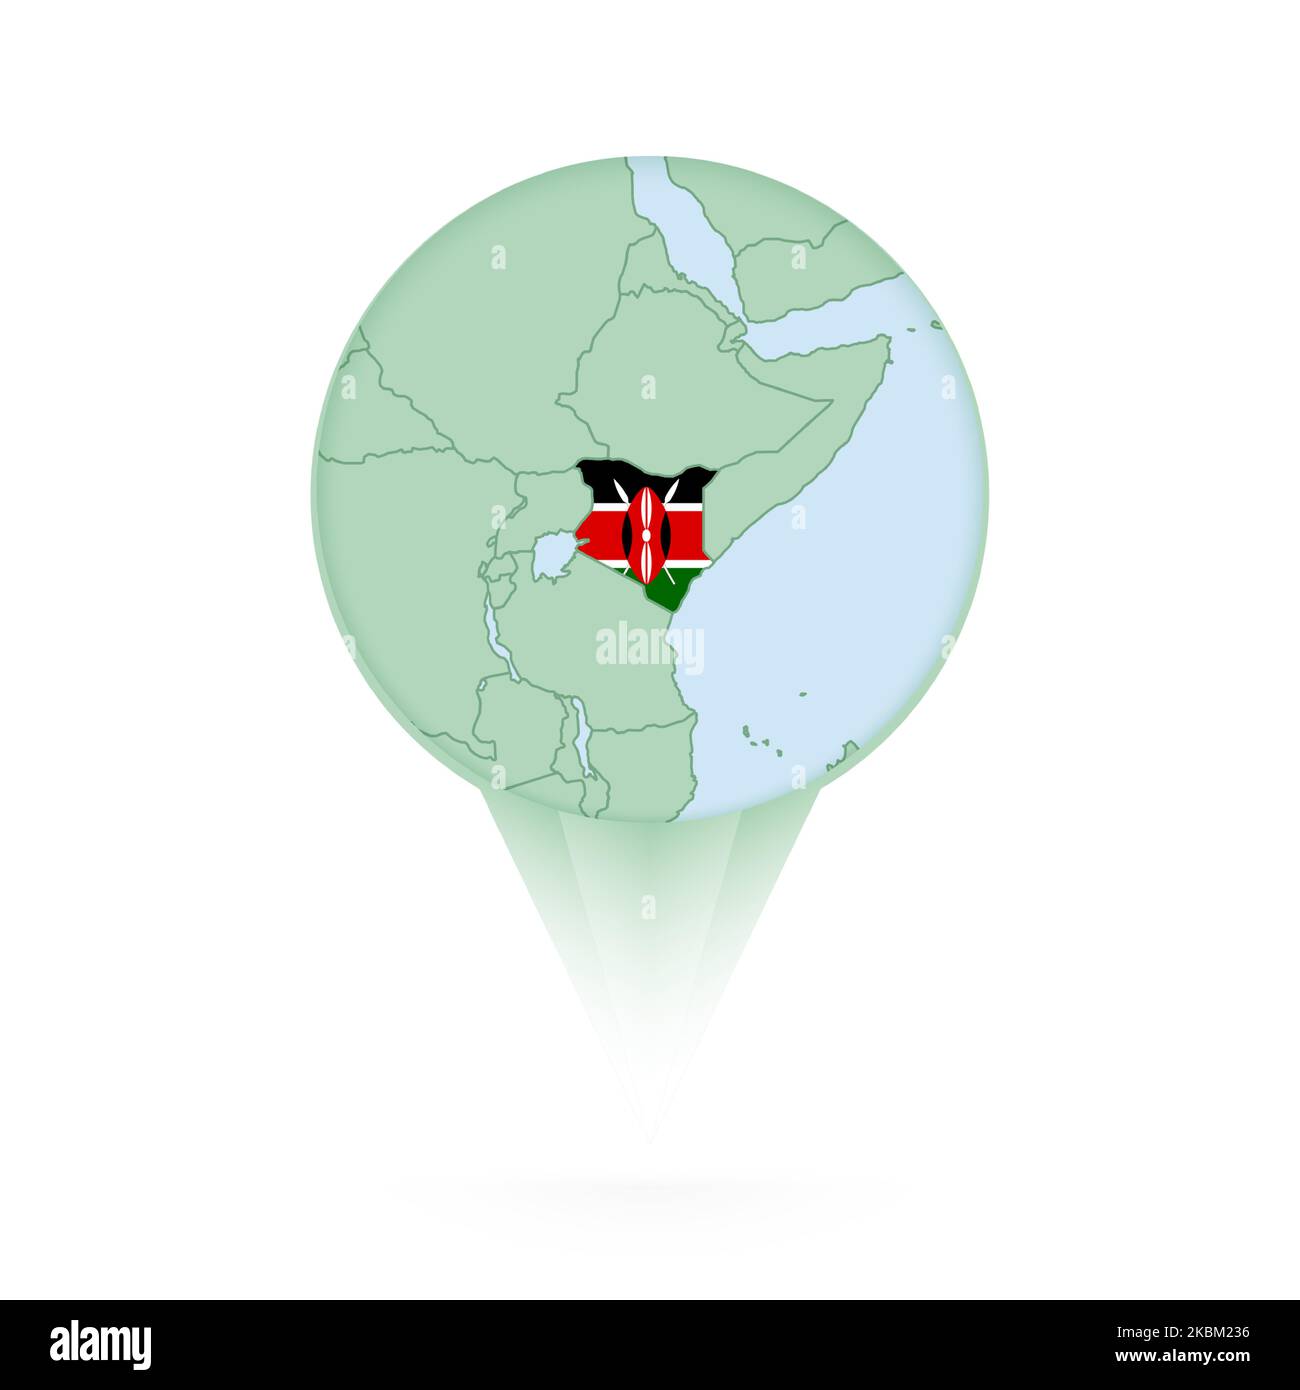 Kenya map, stylish location icon with Kenya map and flag. Green pin icon. Stock Vector